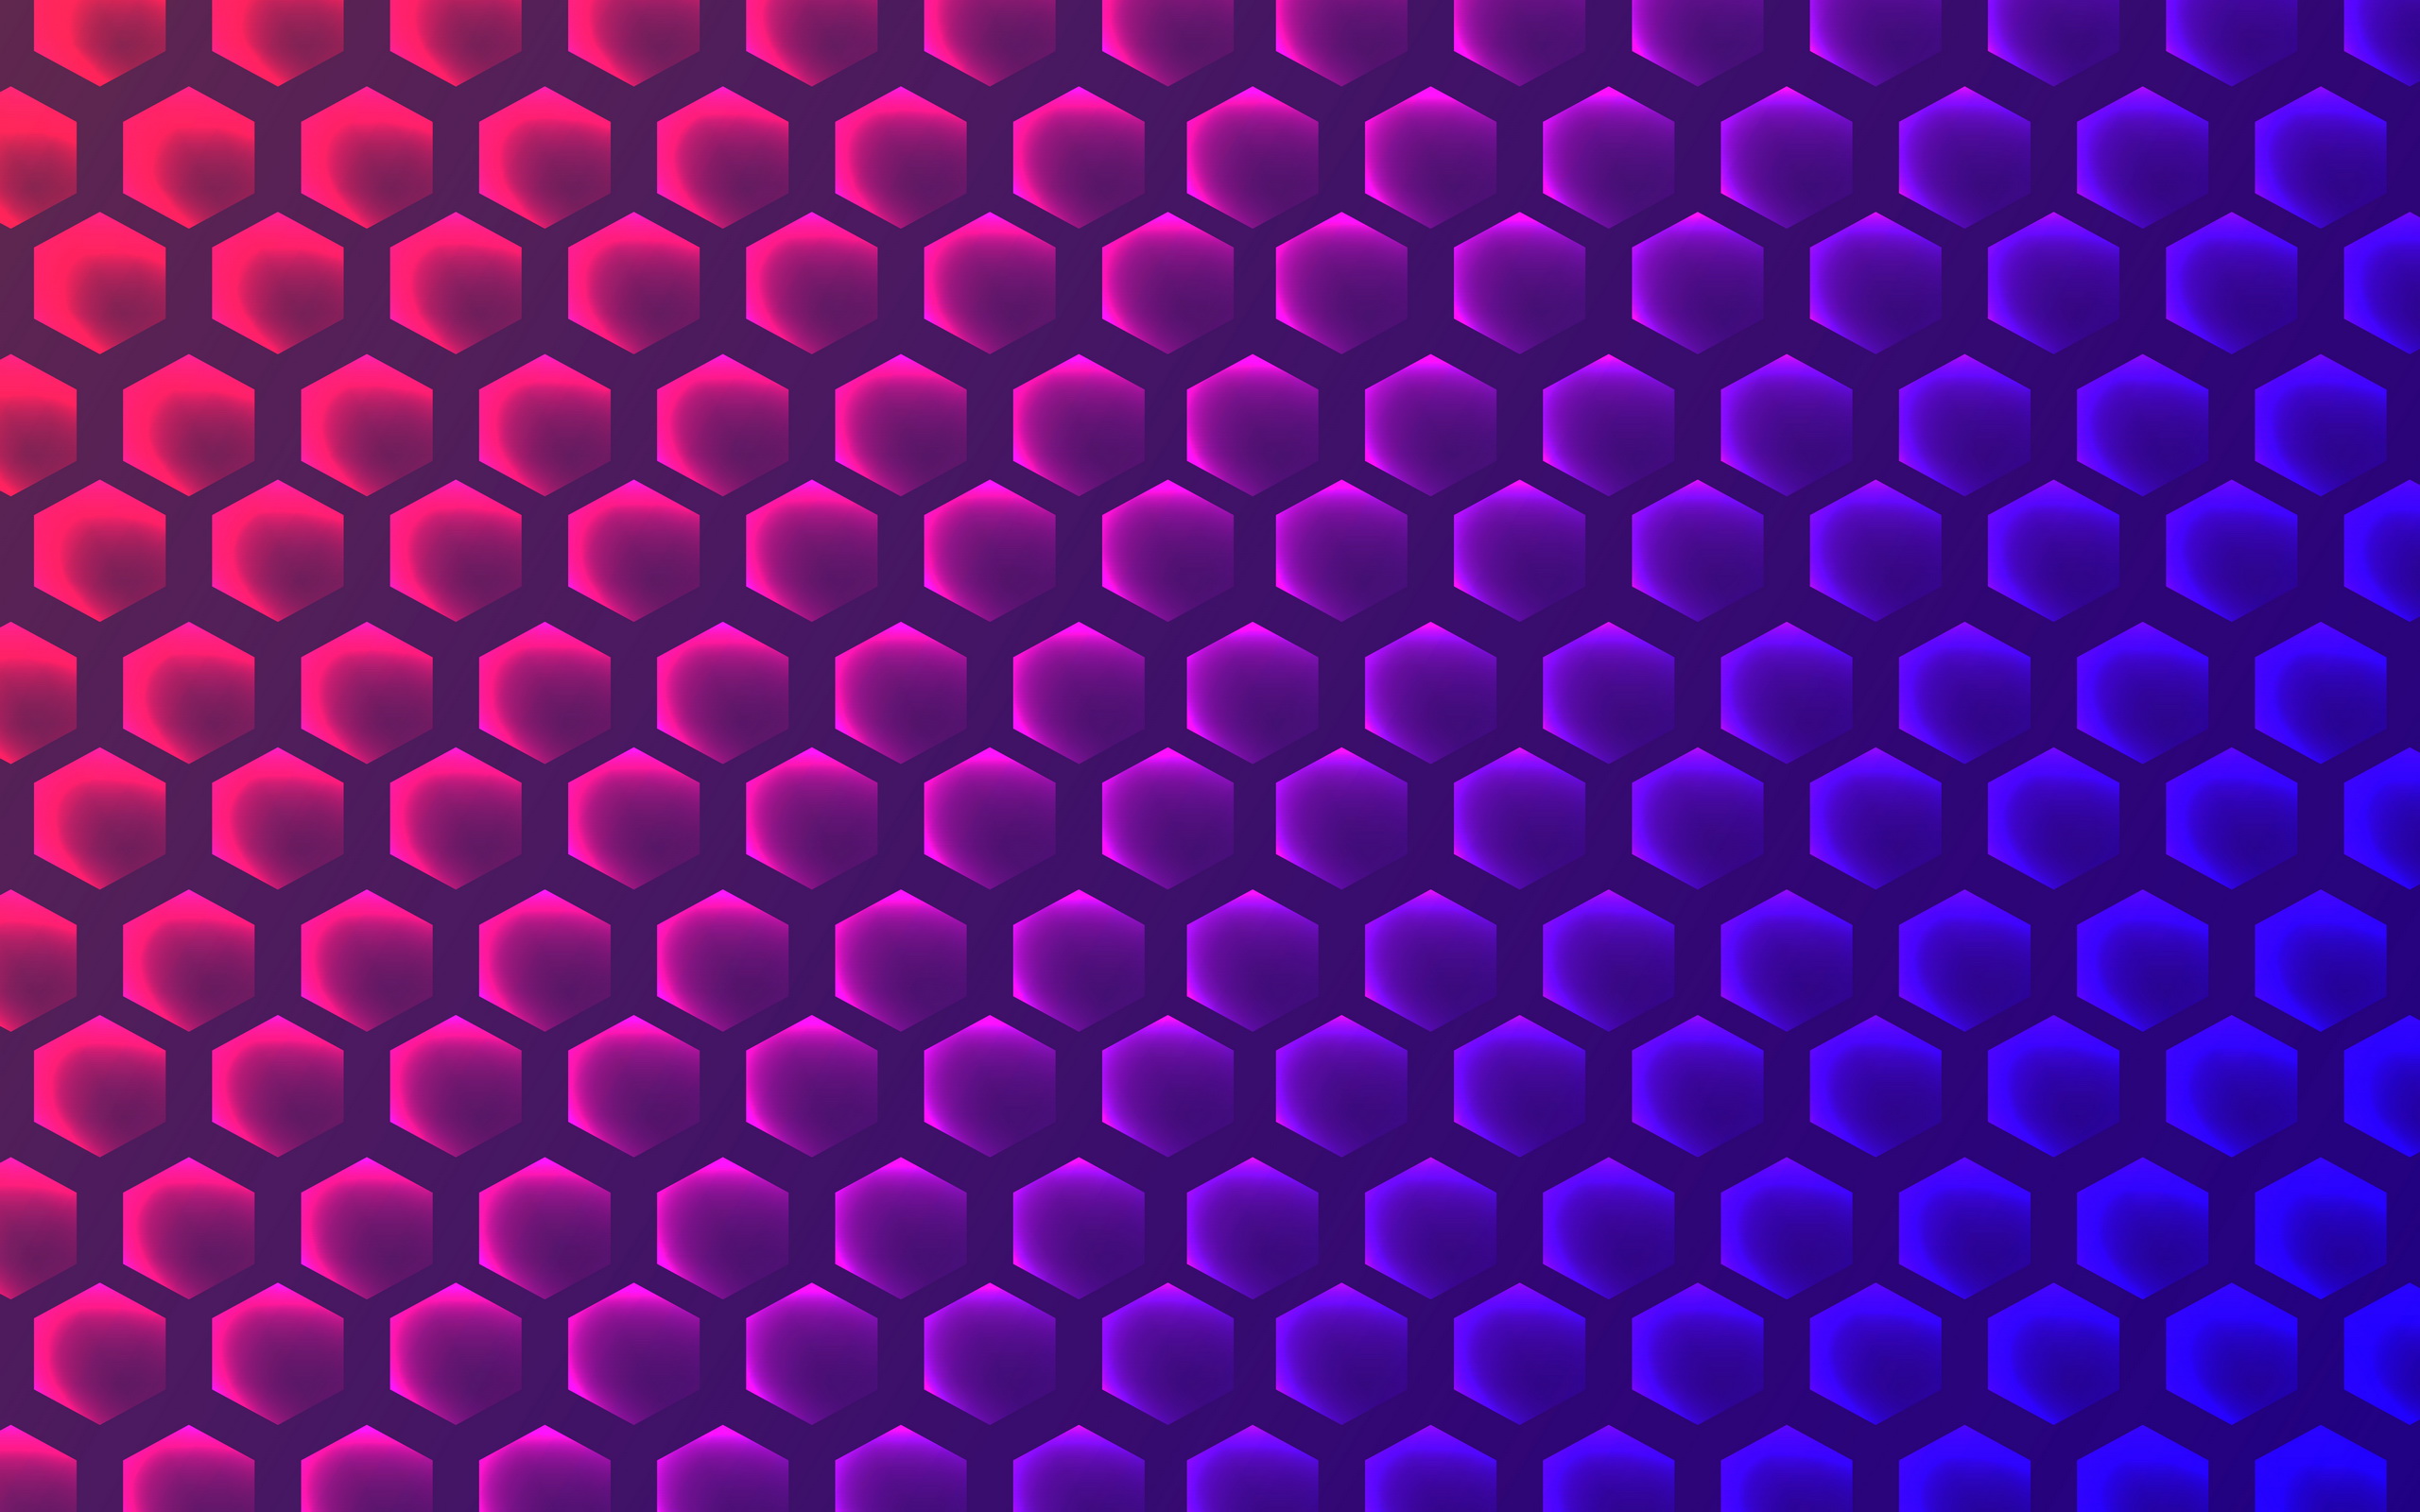 Digital Art Hexagon Pattern 2560x1600